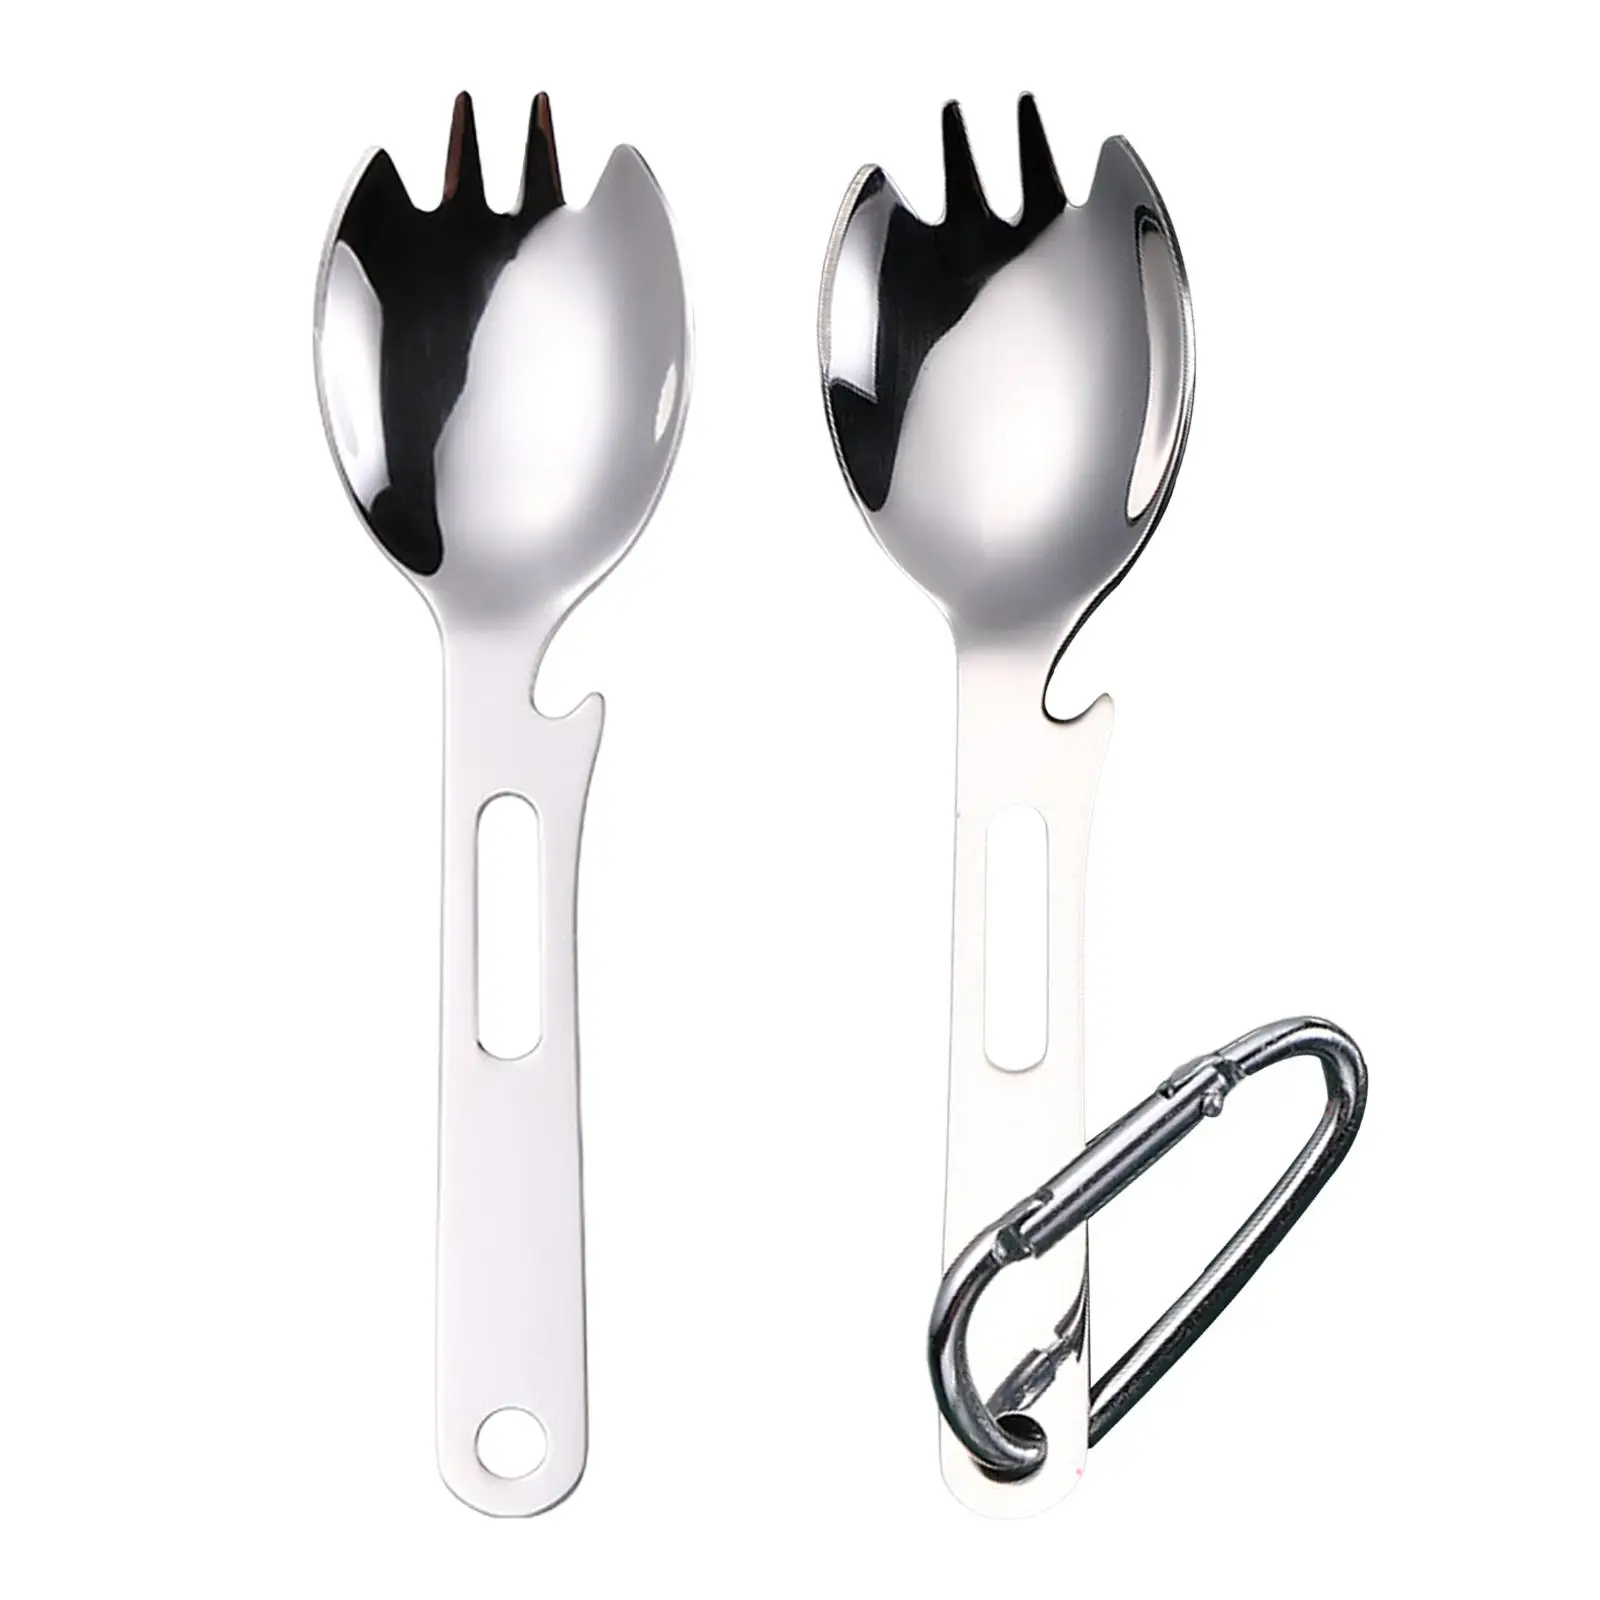 Multifunctional Spork Spoon Can Opener Wrench Cutlery Utensils Stainless Steel